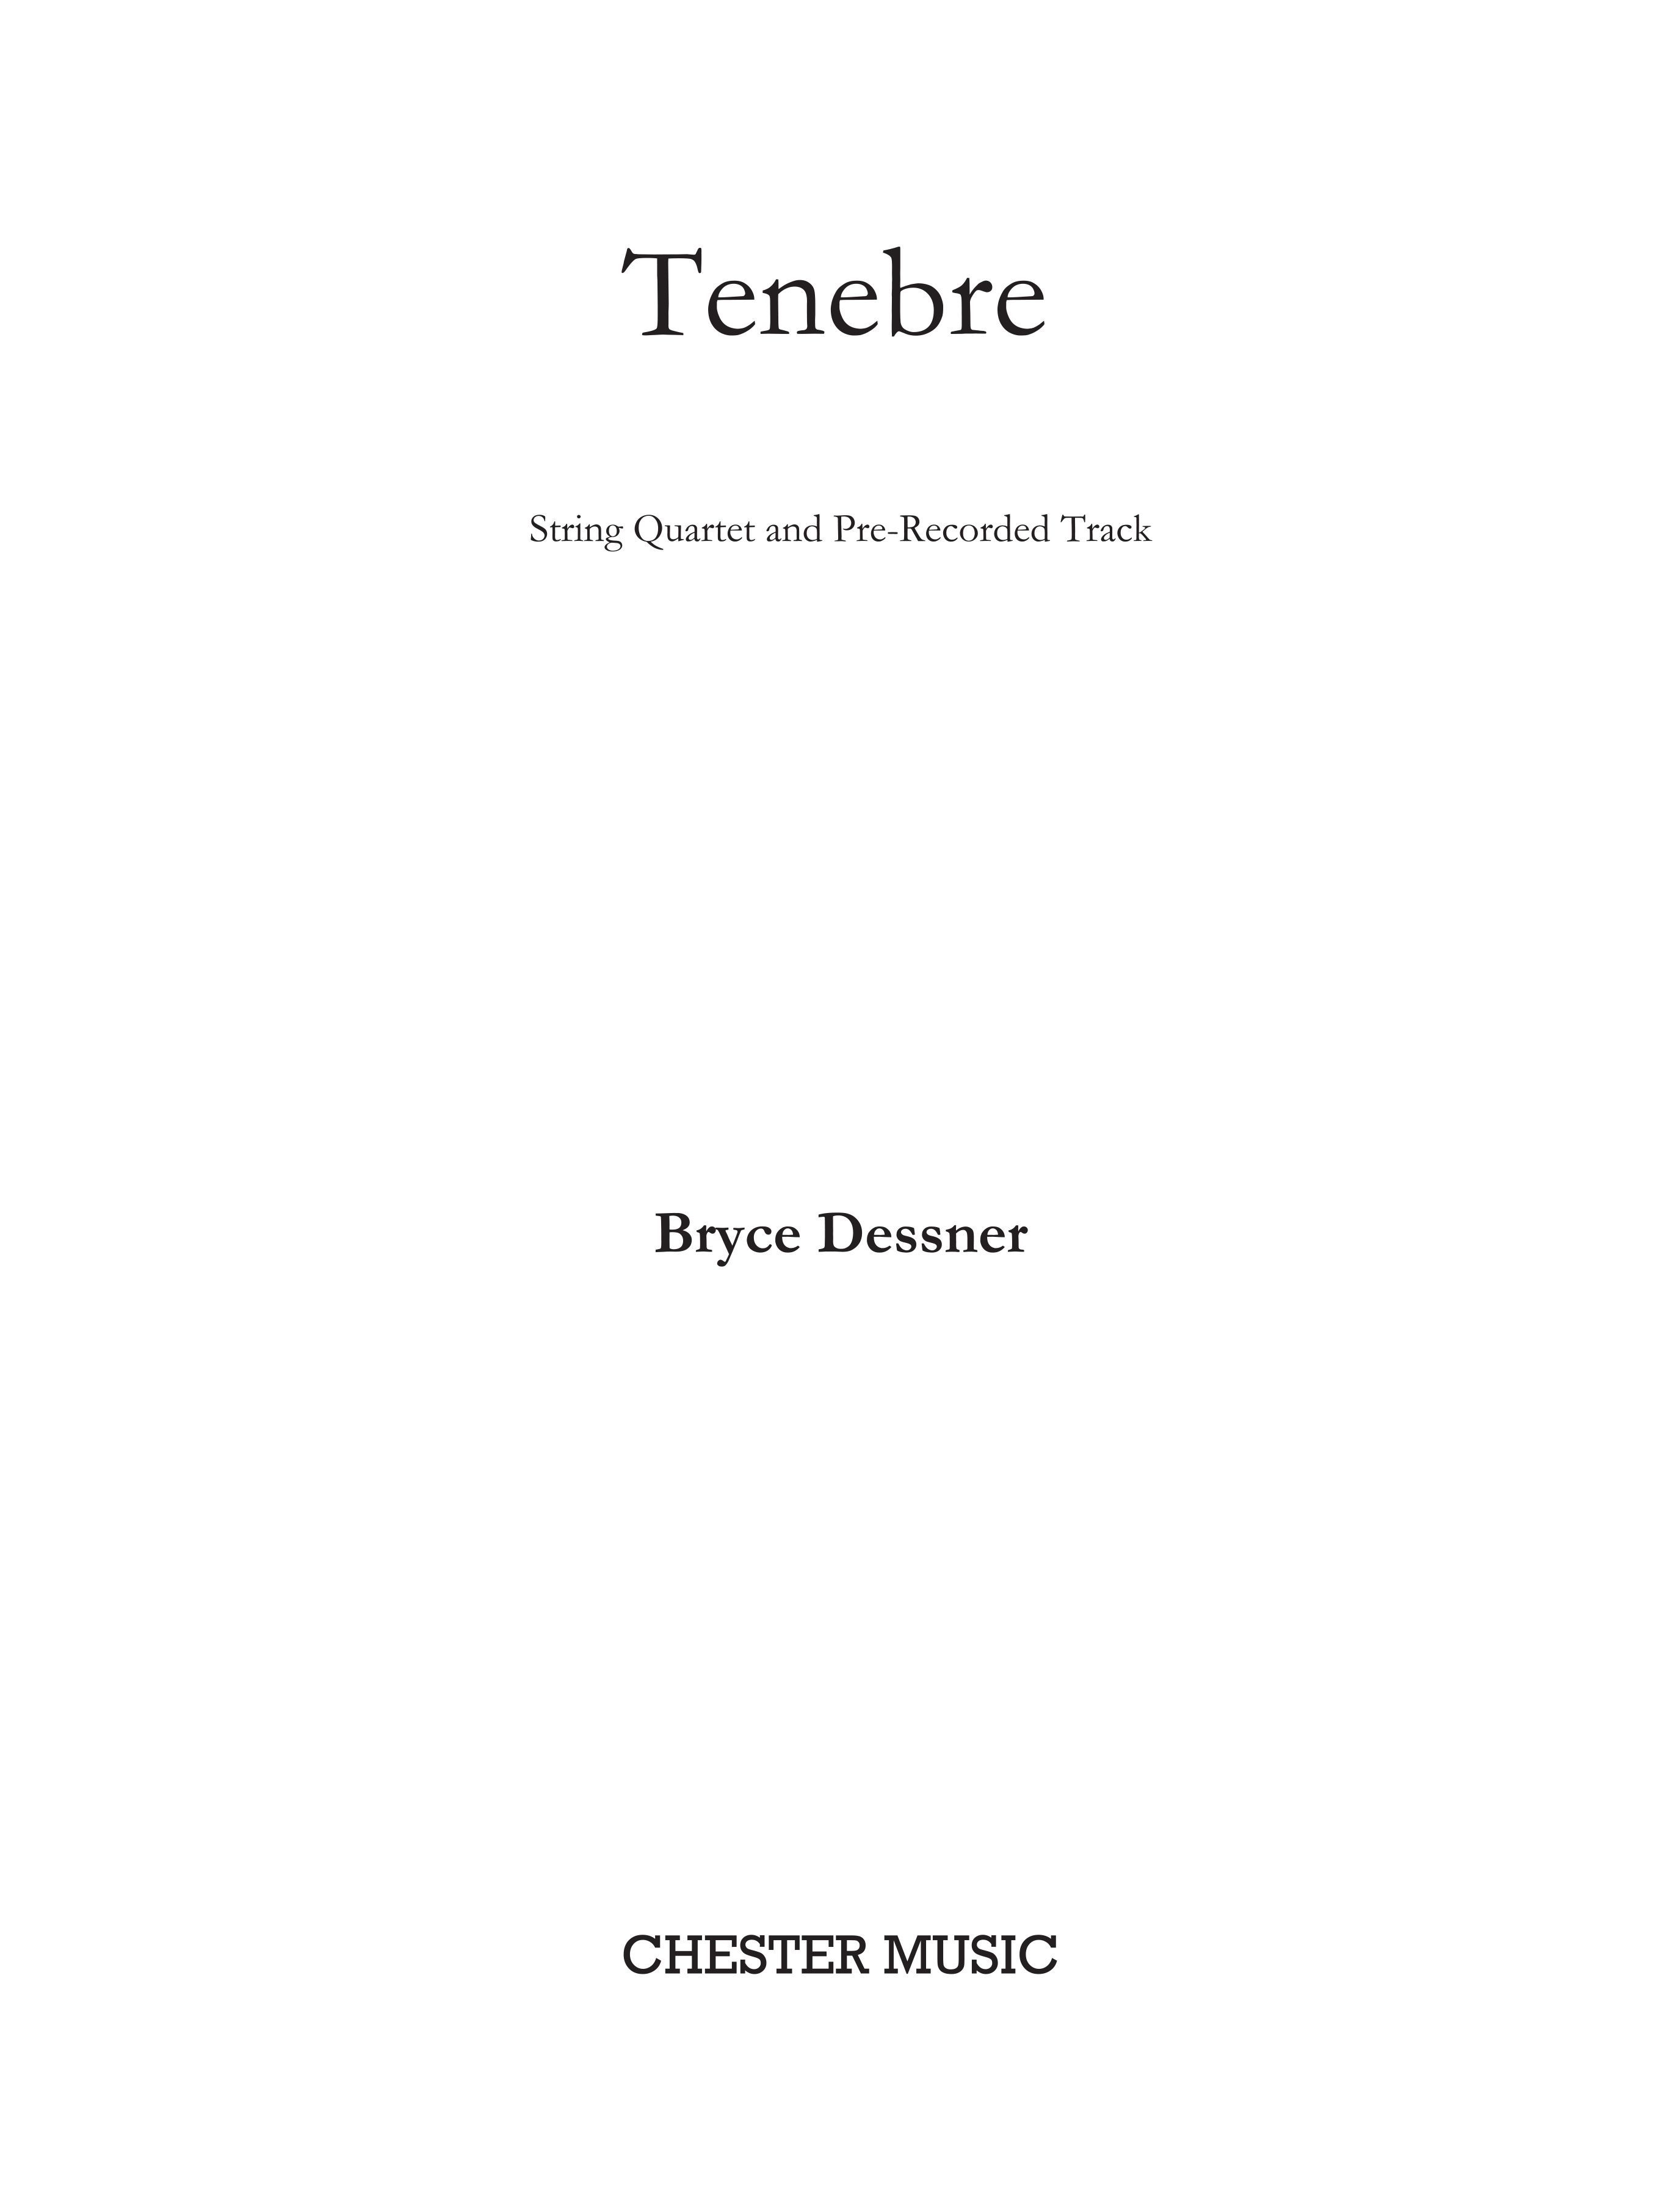 Bryce Dessner: Tenebre For String Quartet And Pre-recorded Track: String